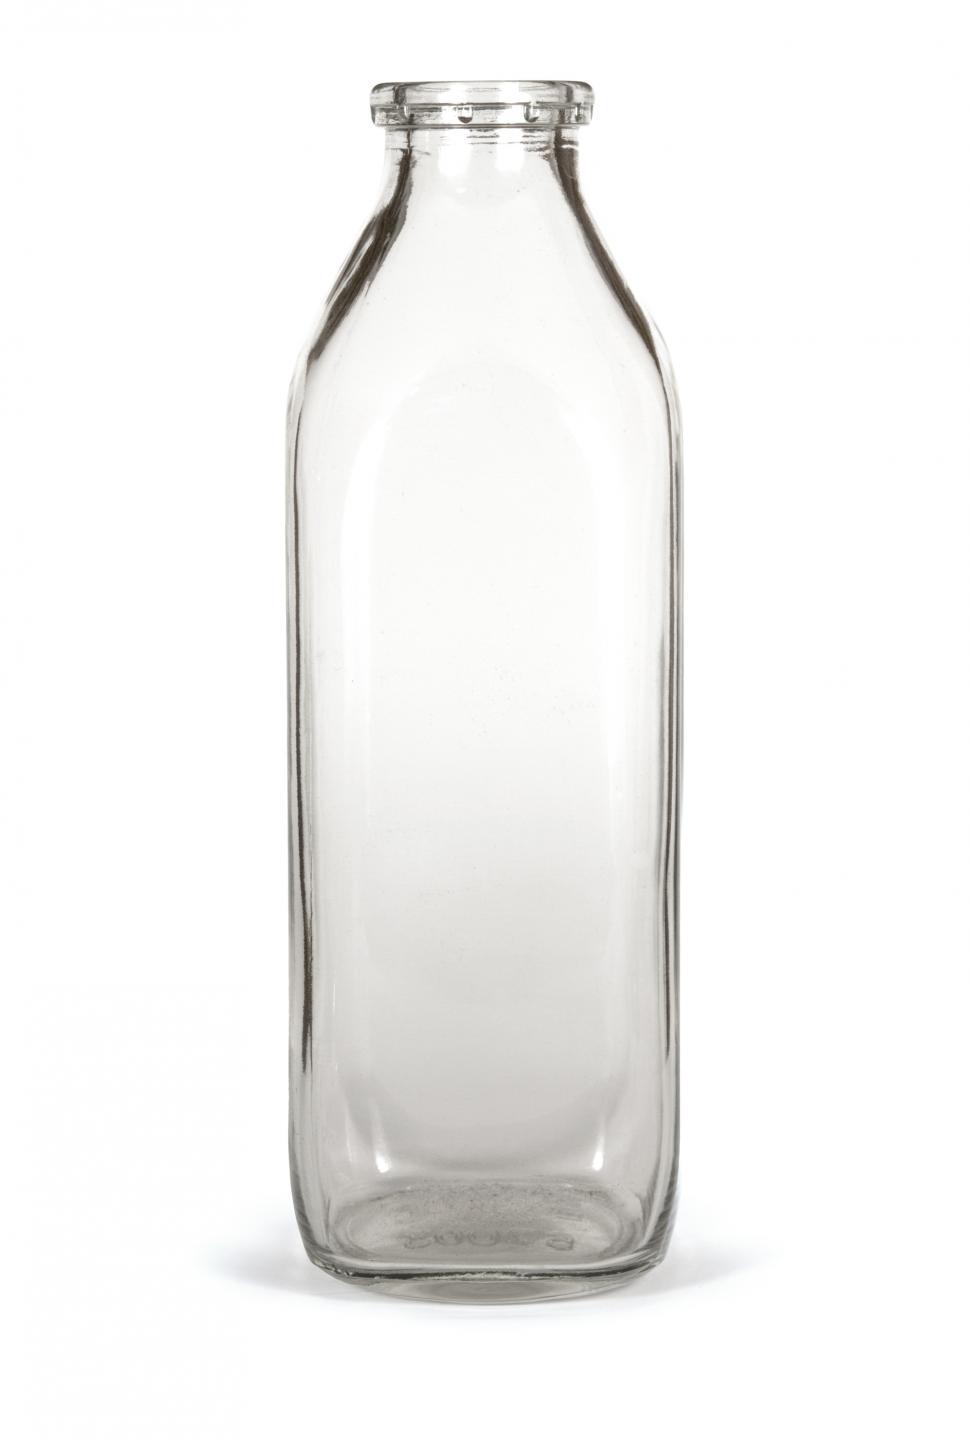 Free Image of Glass Milk Bottle 